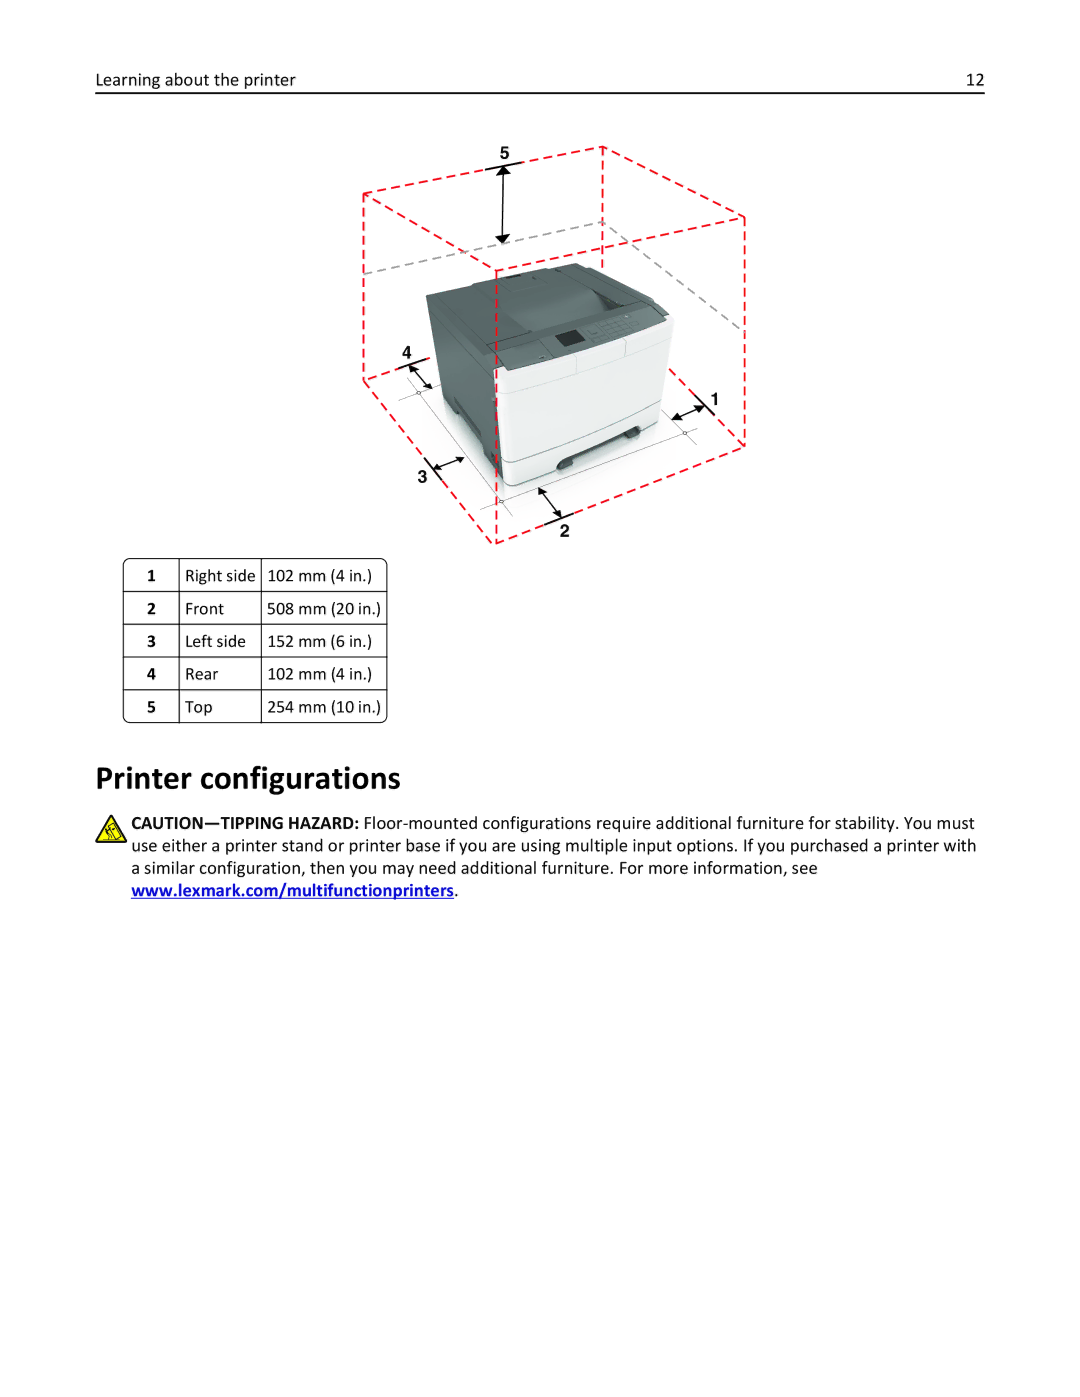 Lexmark CS410 manual Printer configurations 